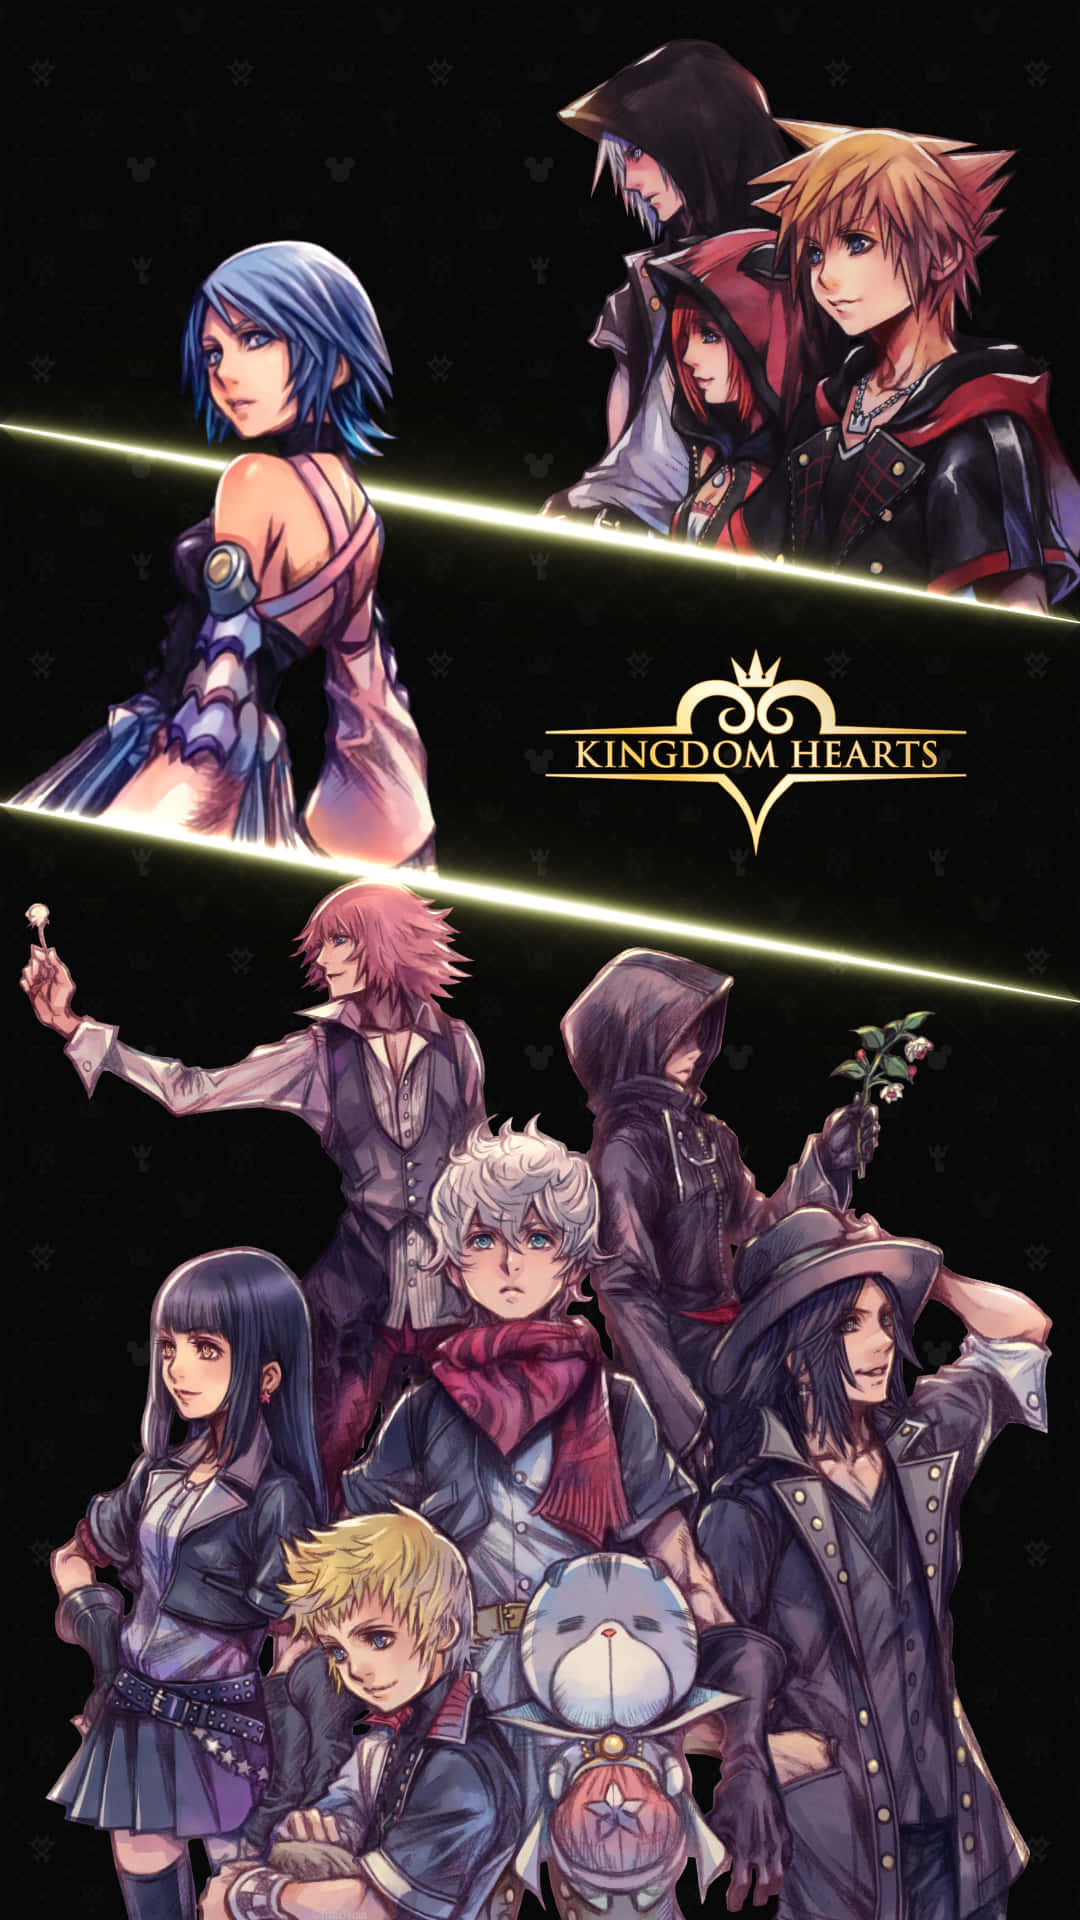 Telefon Kingdom Hearts Wallpaper